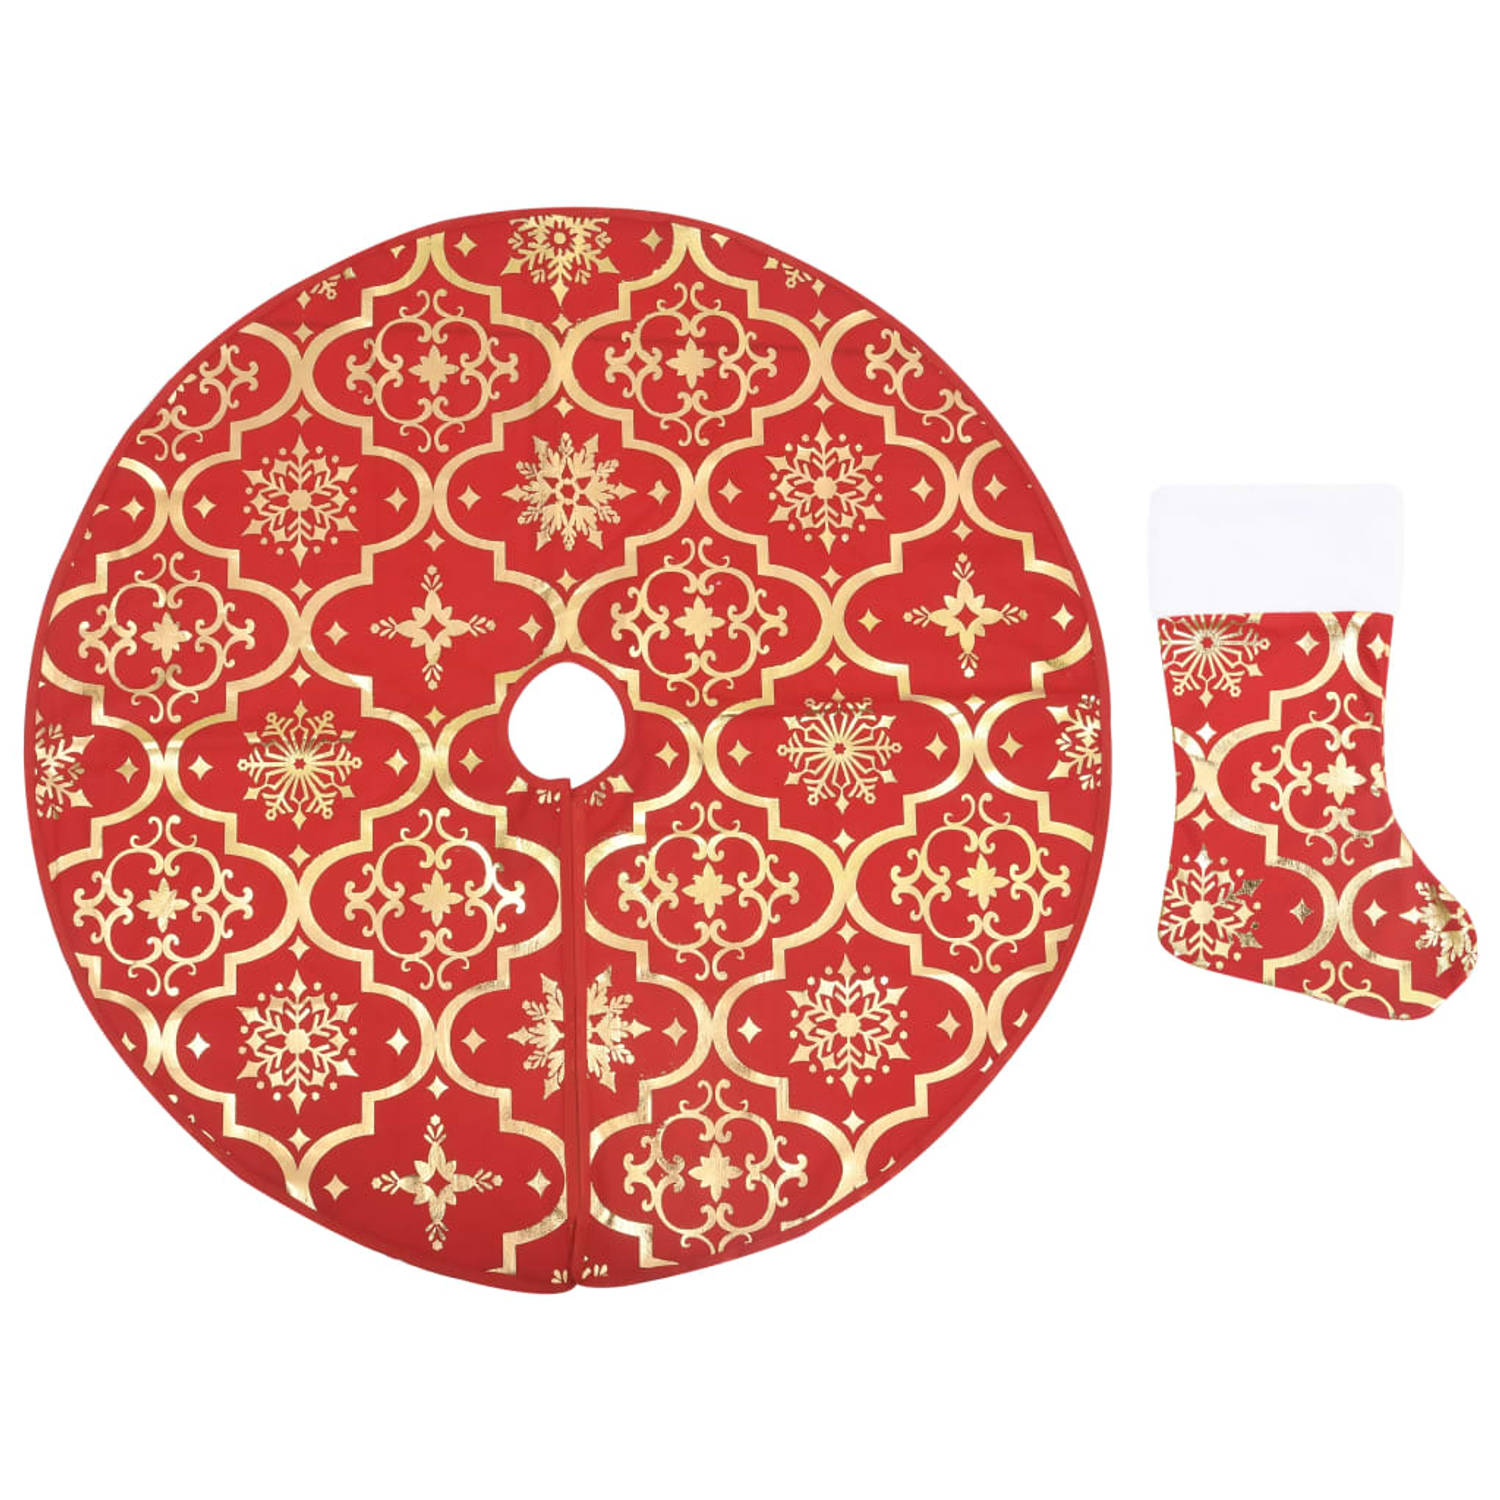 The Living Store Kerstboomrok - Rood - 90 cm - Met sneeuwpatroon - Inclusief kerstsok